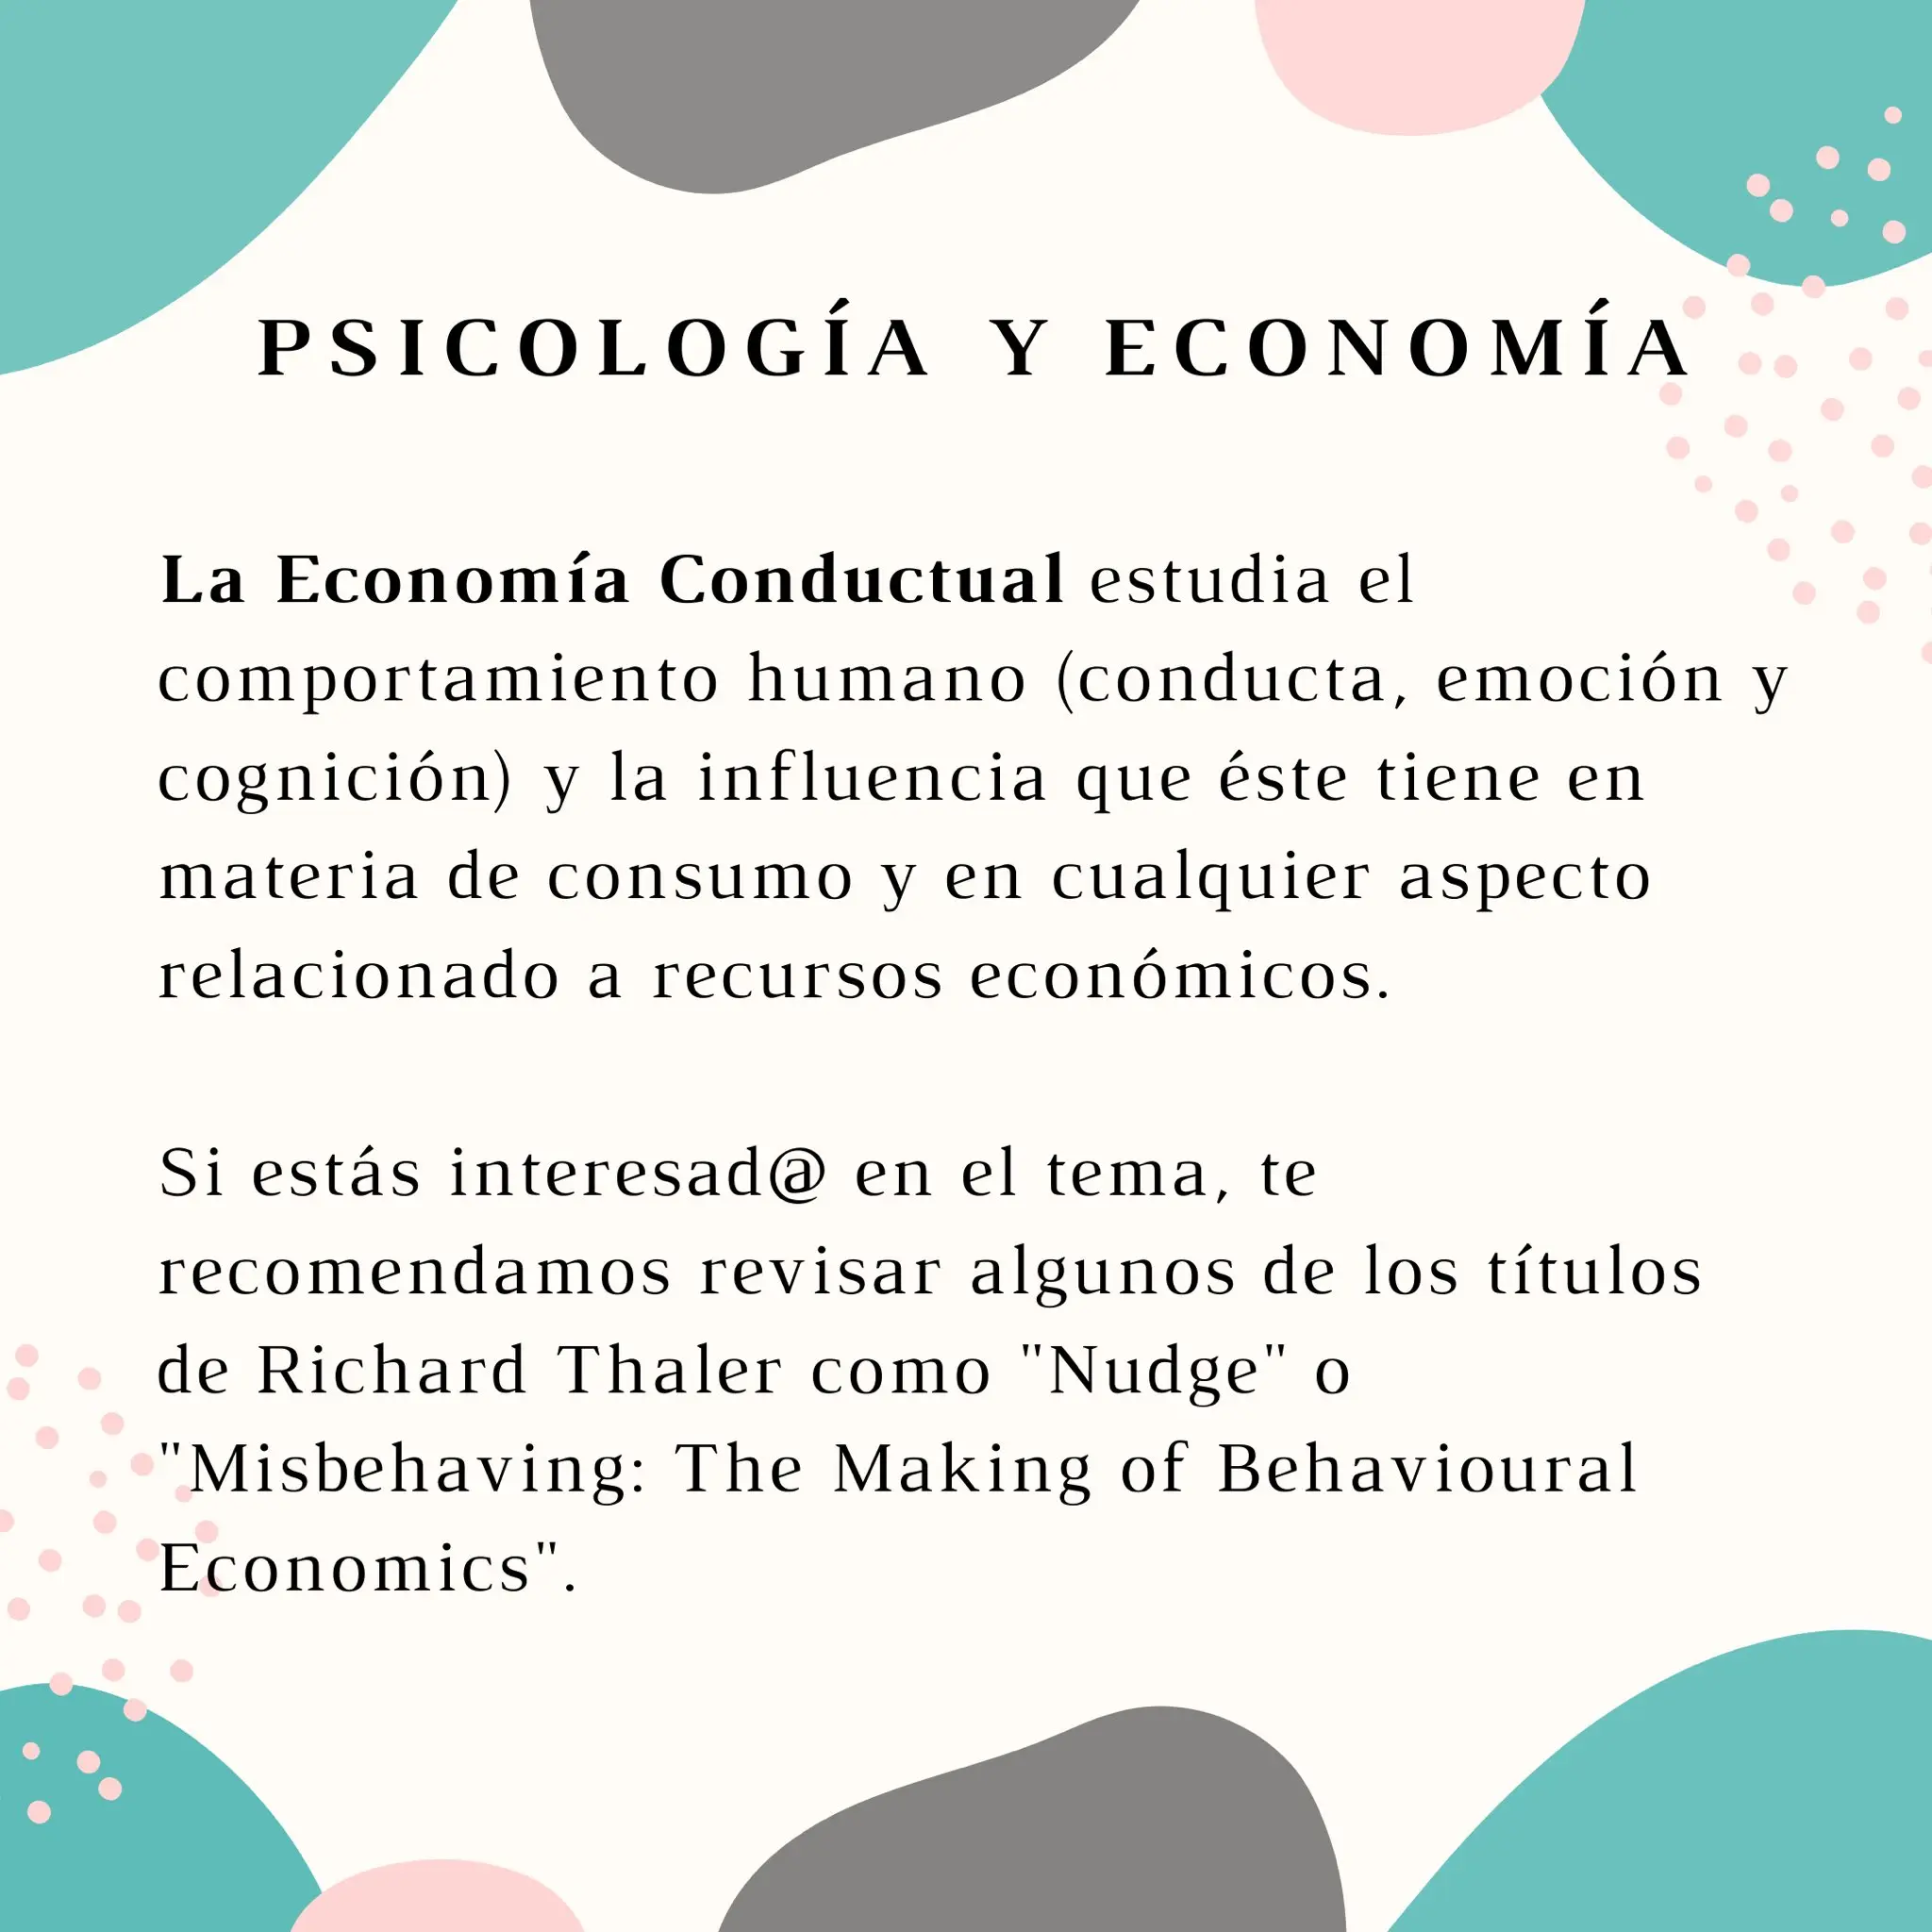 relacion de la psicologia con la economia - Cómo se relaciona la economía con la psicología